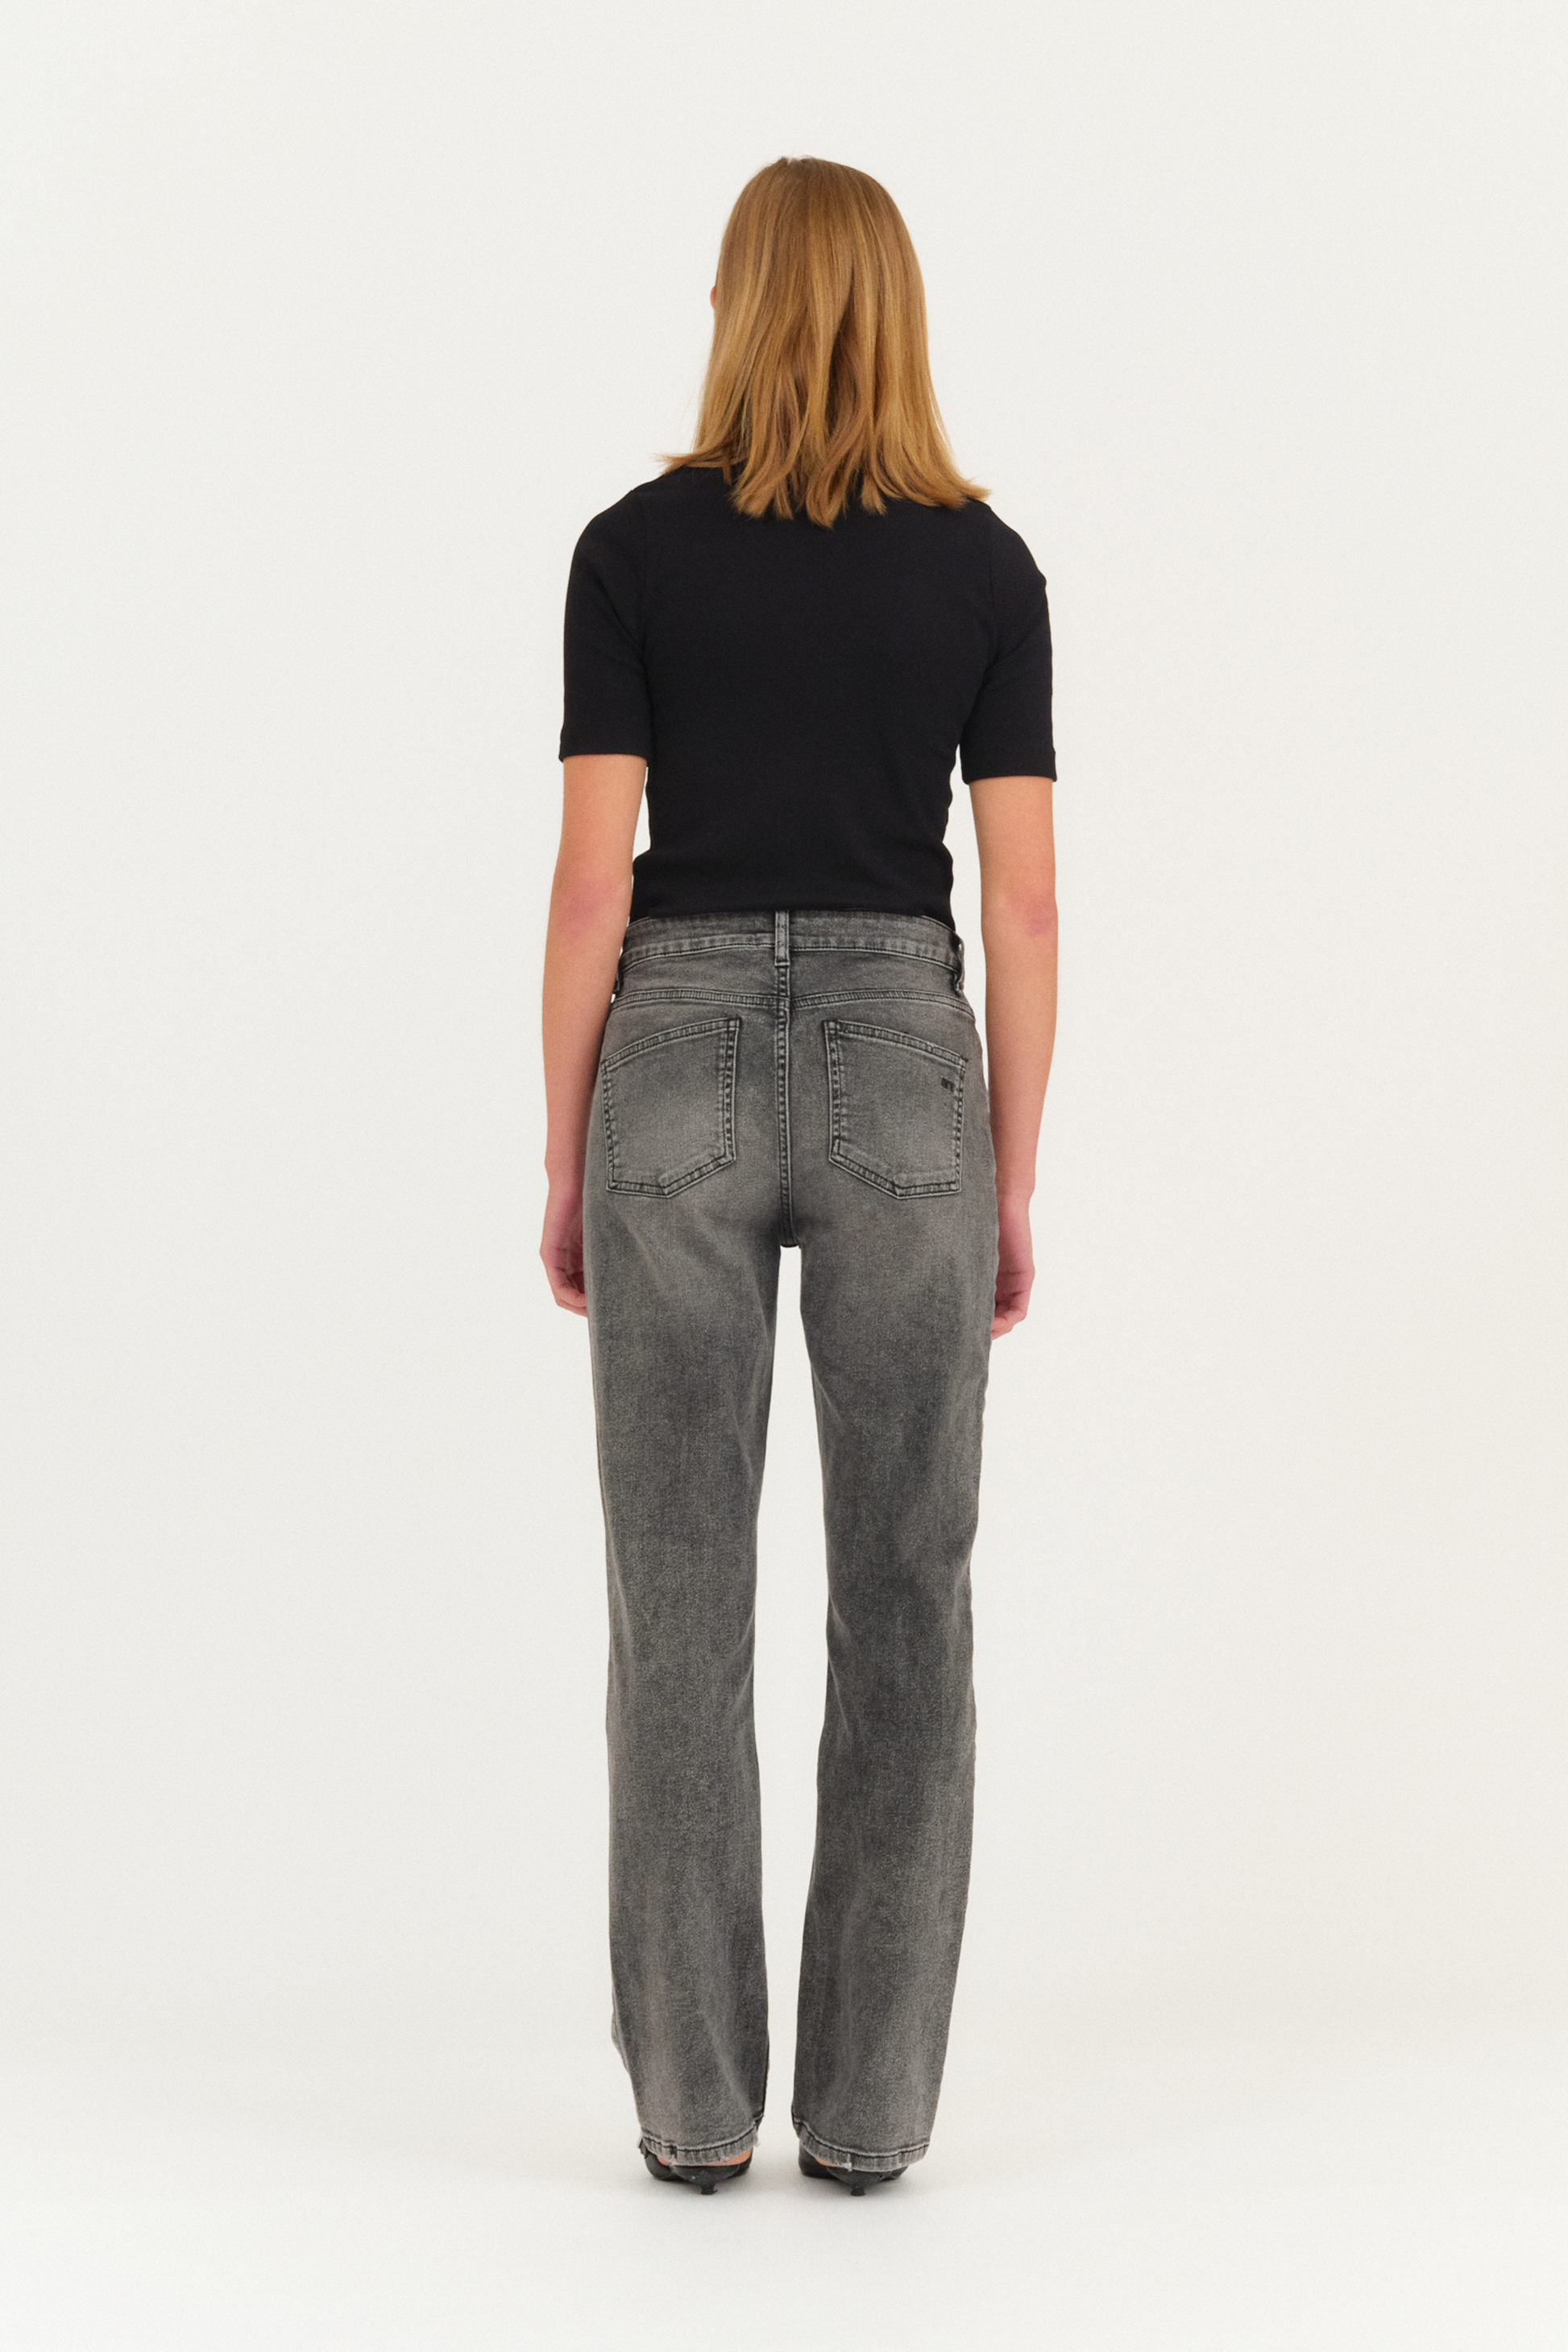 IVY-Lulu Jeans Wash Rockstar Grey – Ivy Copenhagen